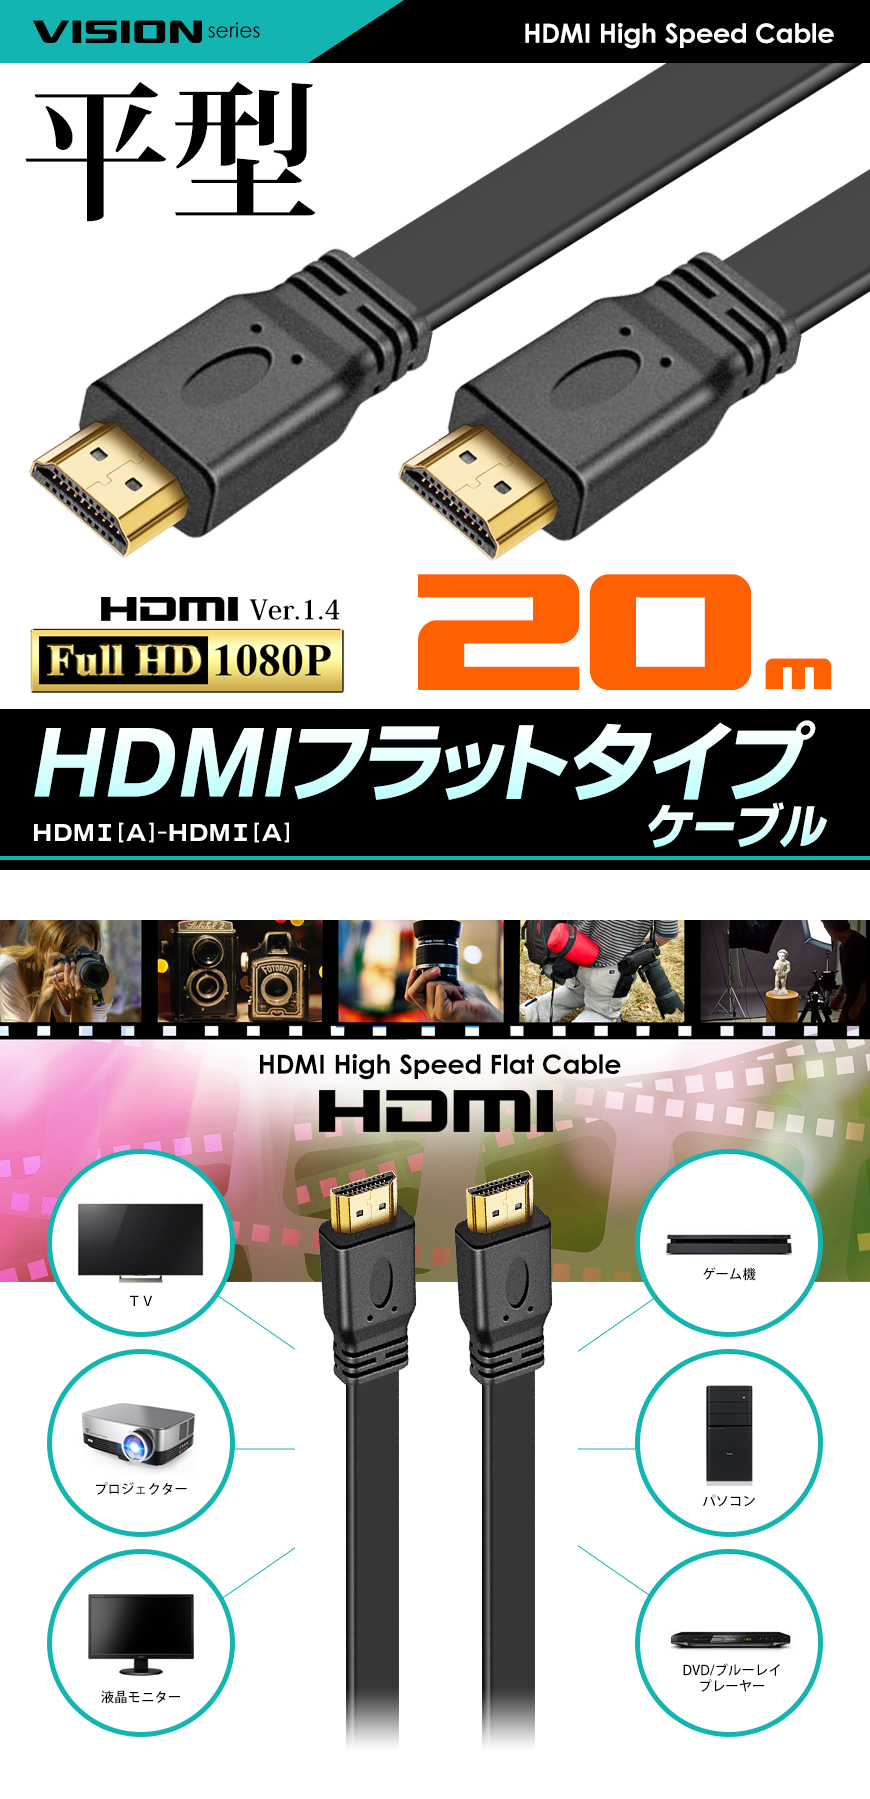 HDMIケーブル フラットケーブル 20m 超薄型 平型 ハイスピード Ver1.4 FullHD 3D フルハイビジョン 送料無料  :BB-HDMIFT200:BeeBraxs - 通販 - Yahoo!ショッピング